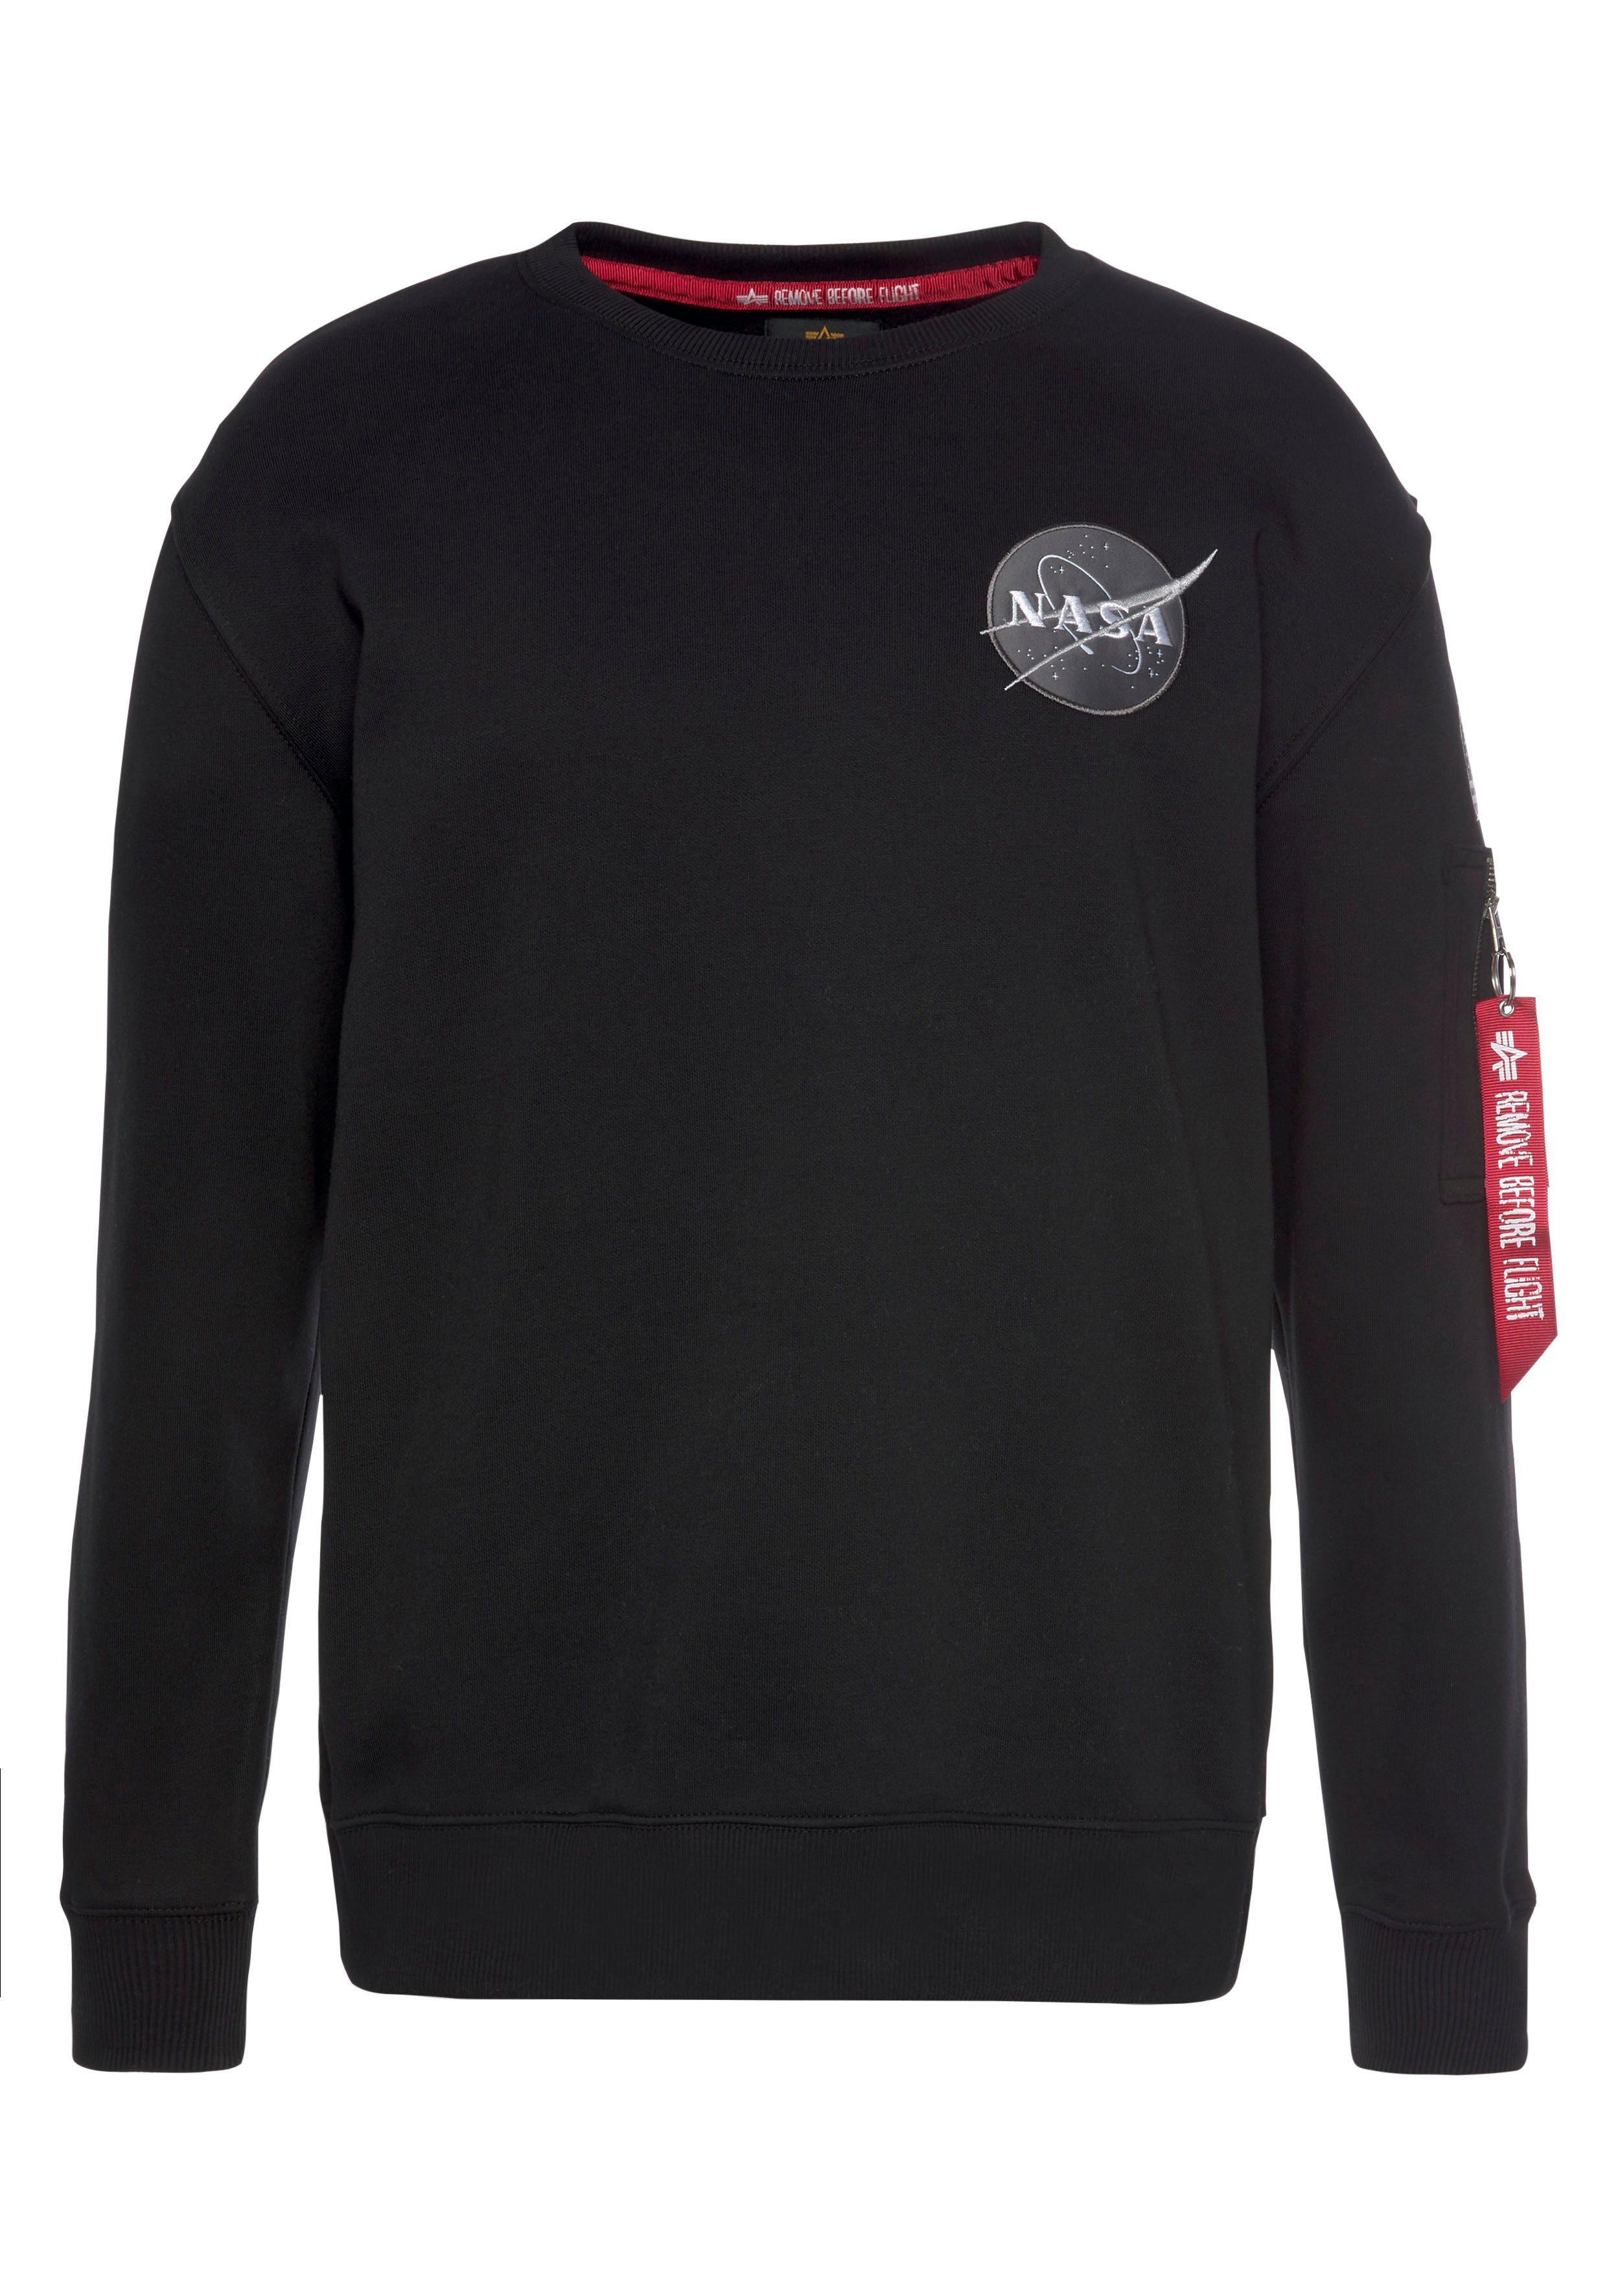 Space Shuttle Alpha Sweatshirt Industries black